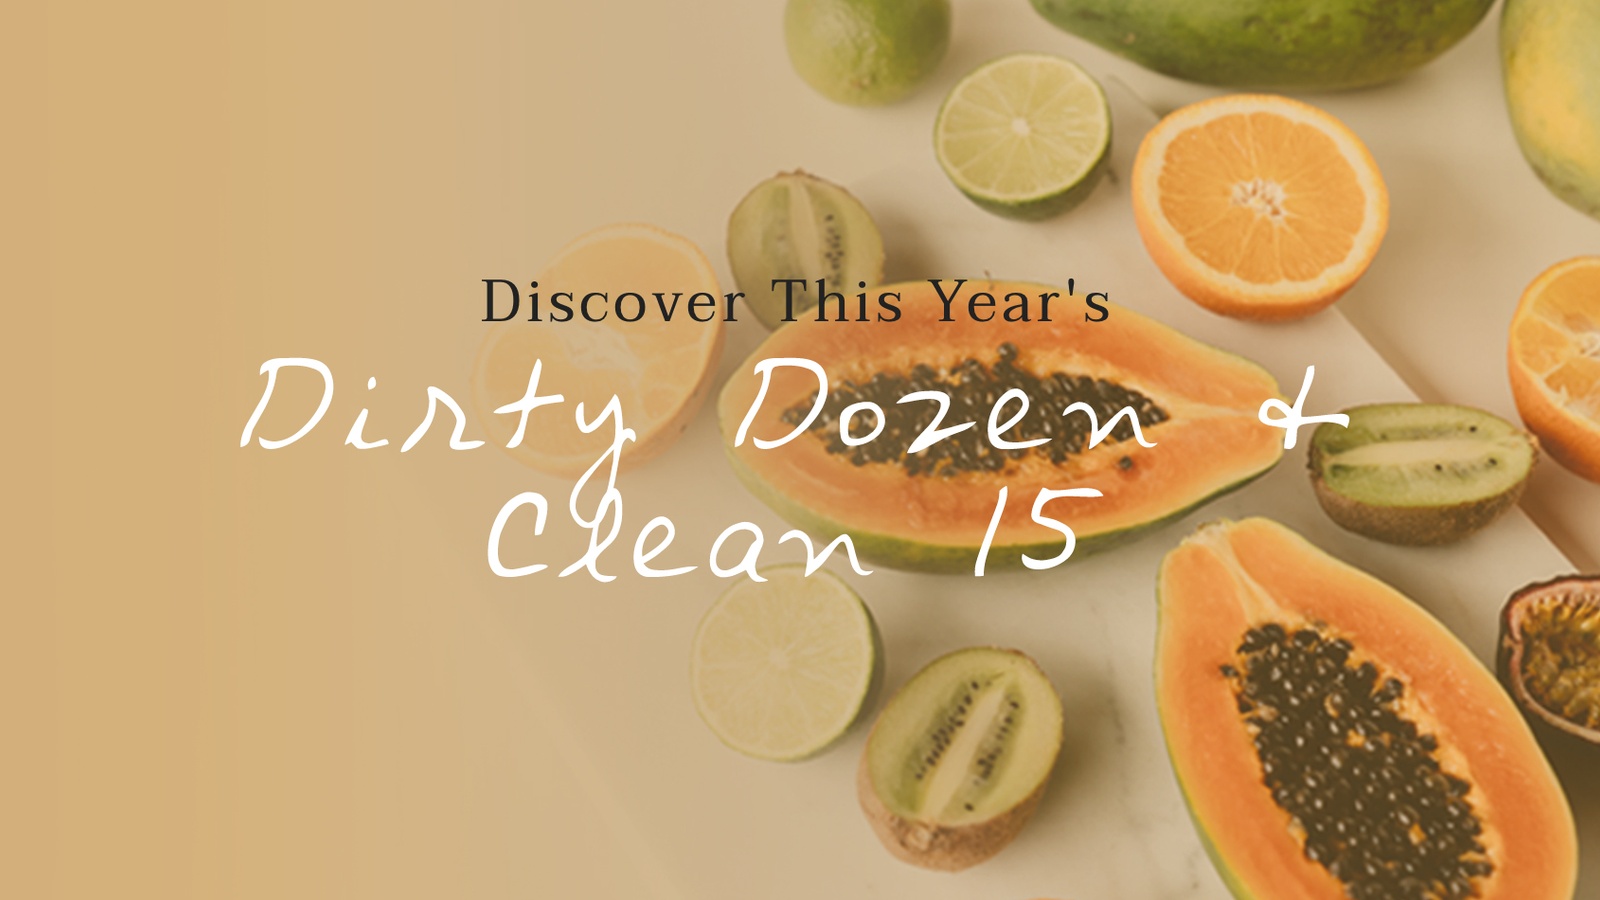 New Report: 2022 Dirty Dozen & Clean 15